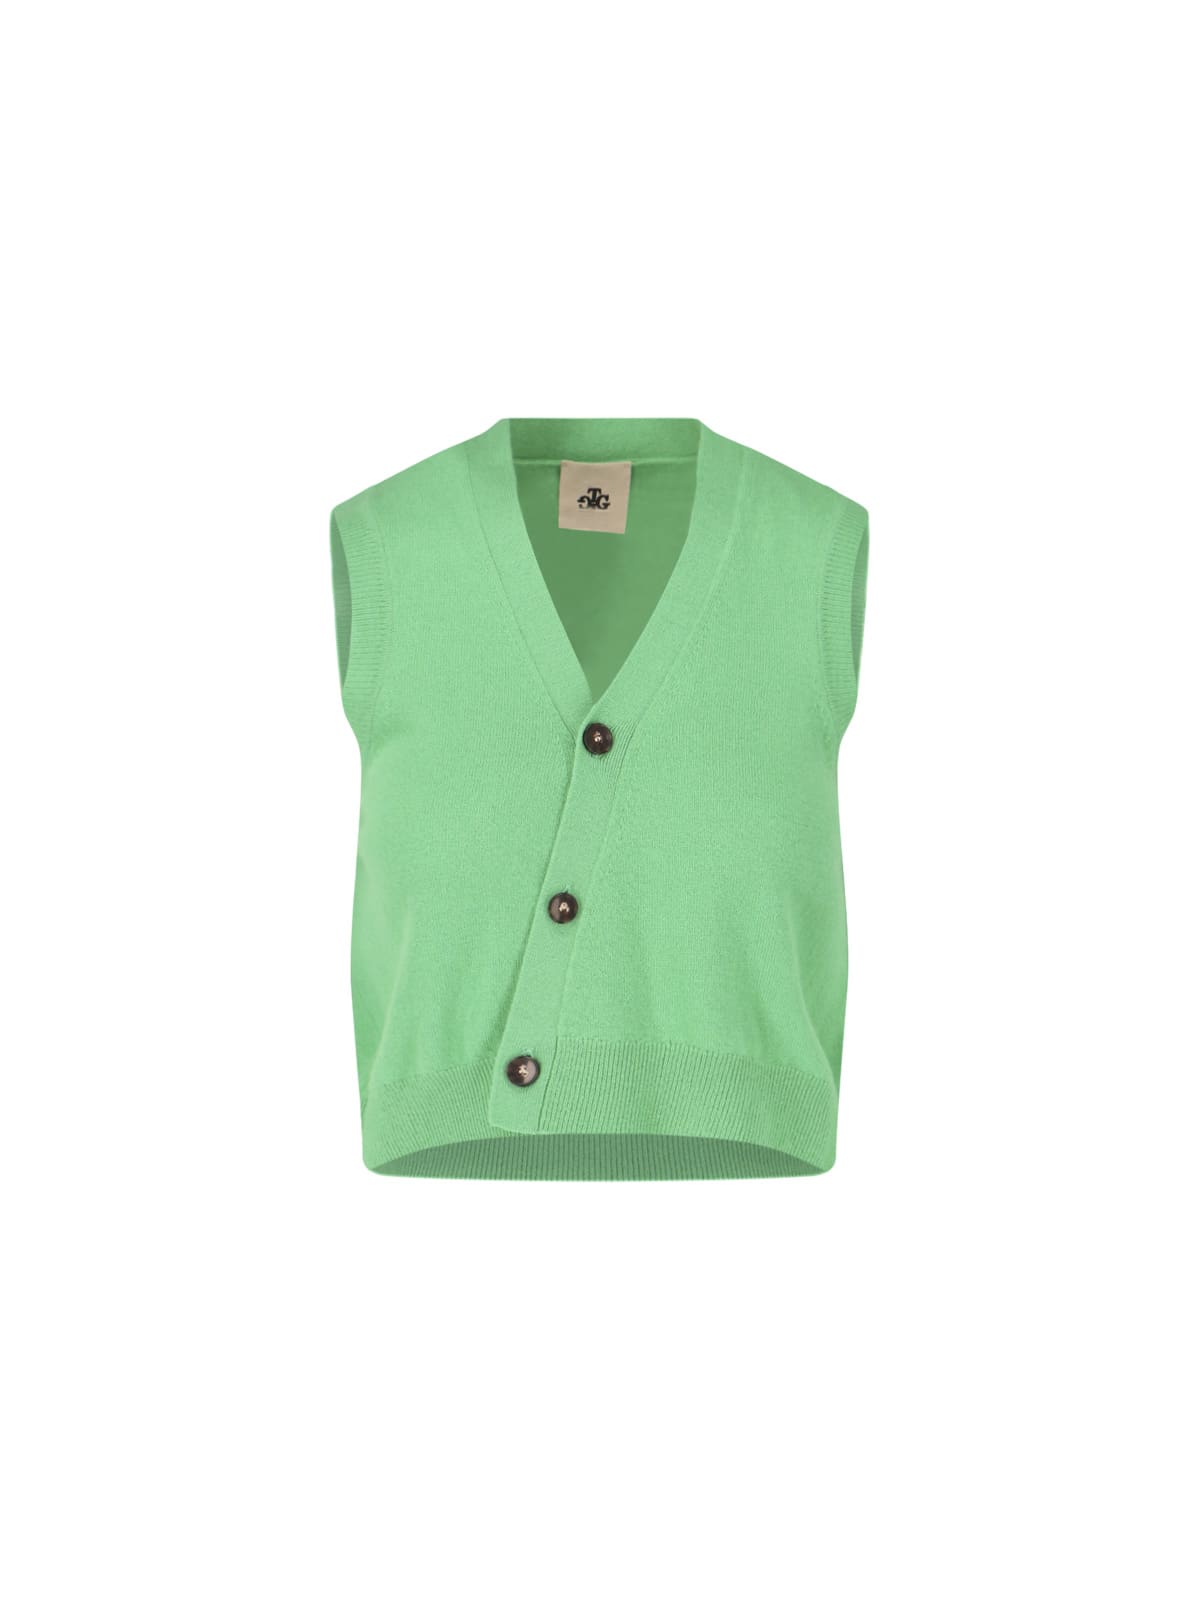 Shop The Garment Vest Como In Green